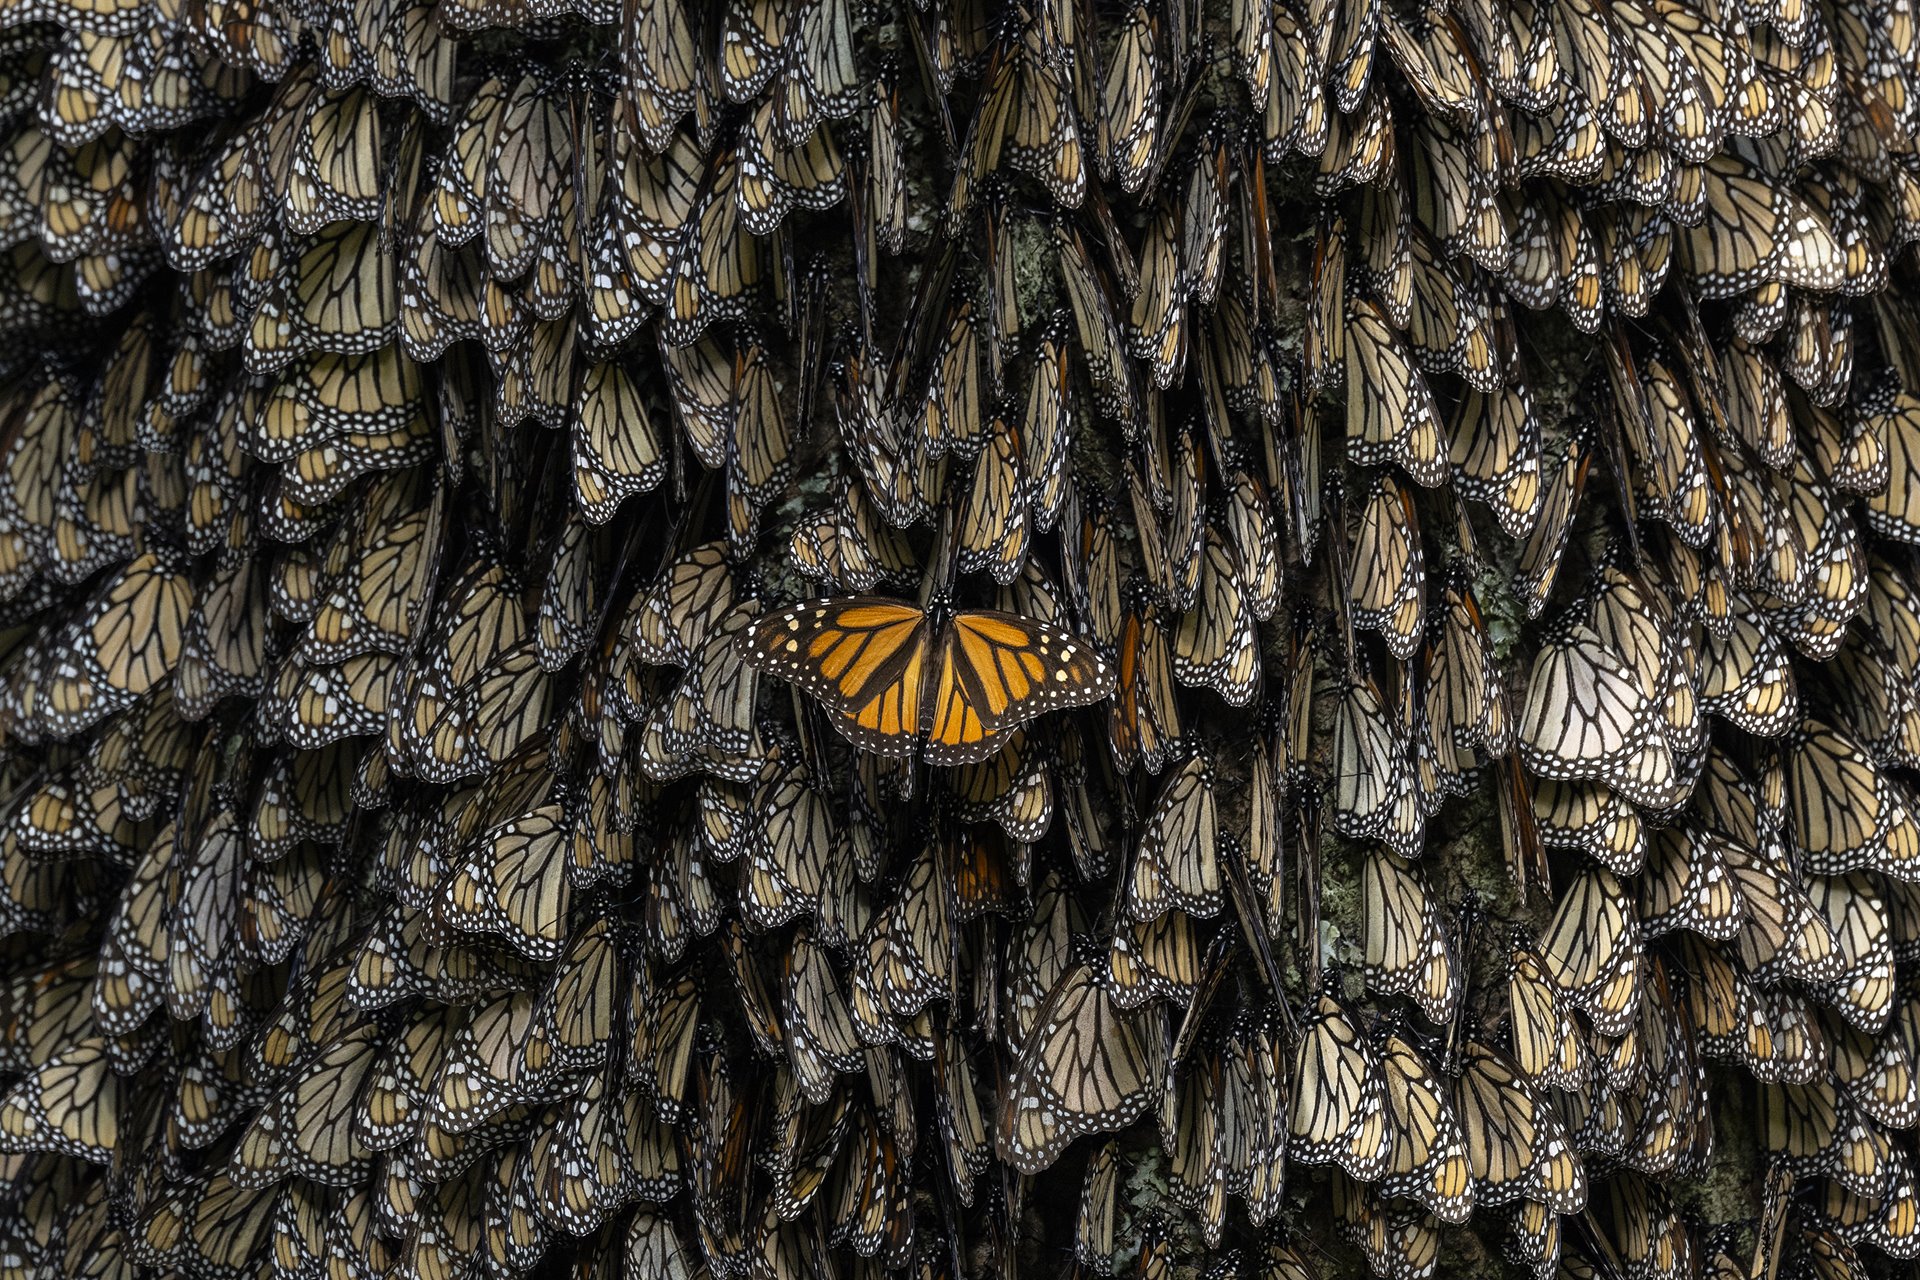 Saving the Monarchs